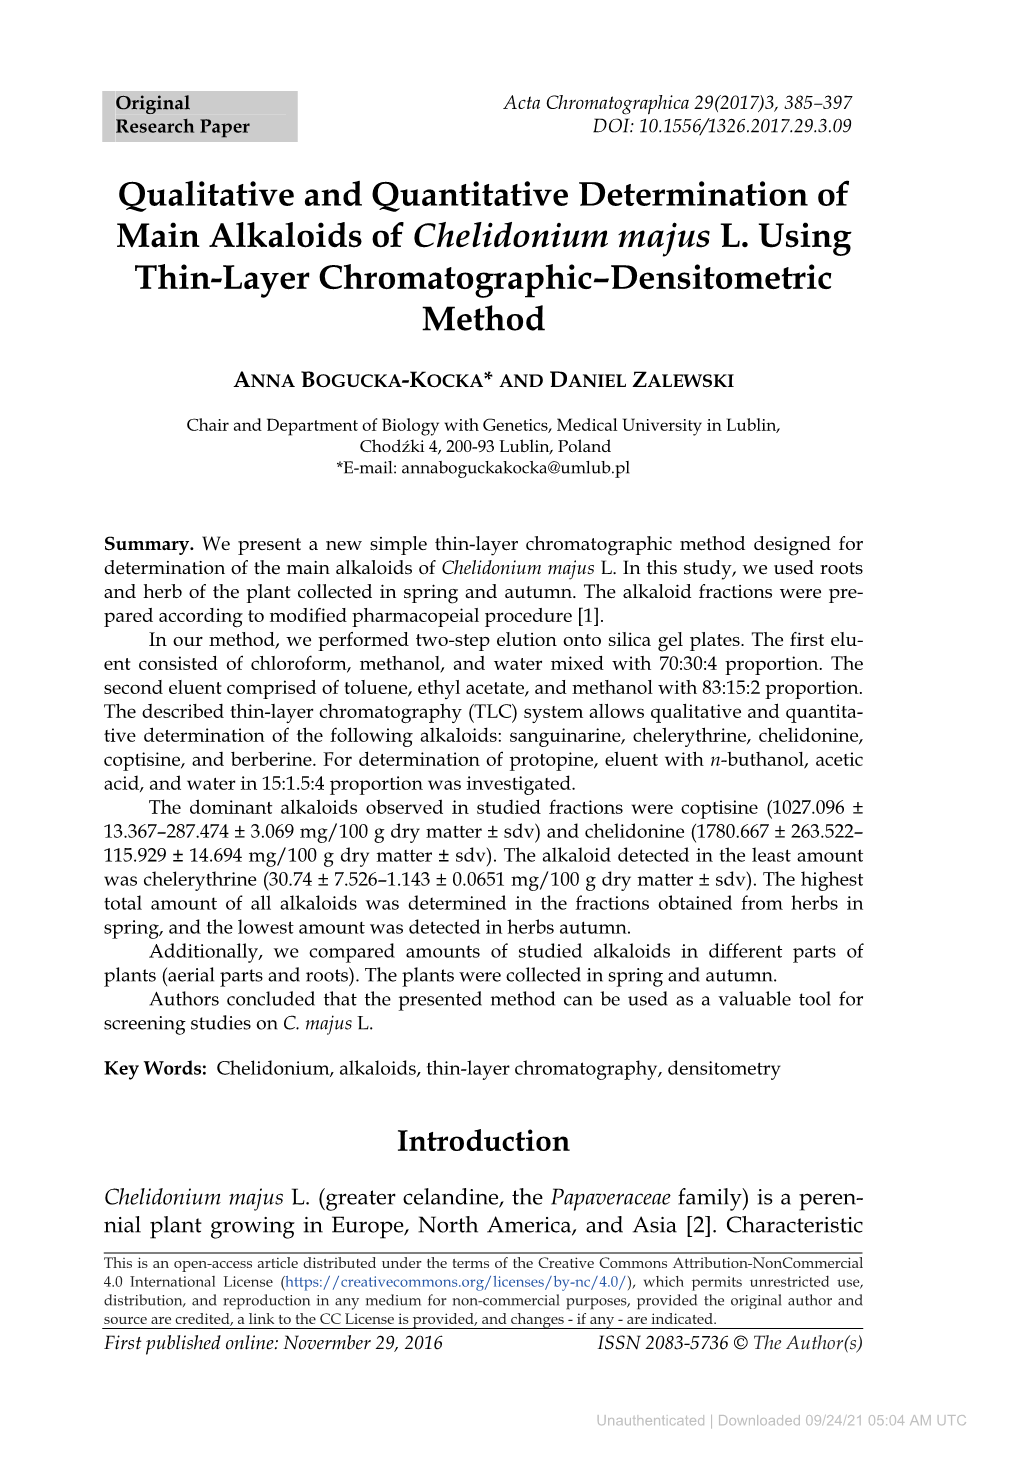 Qualitative and Quantitative Determination of Main Alkaloids of Chelidonium Majus L